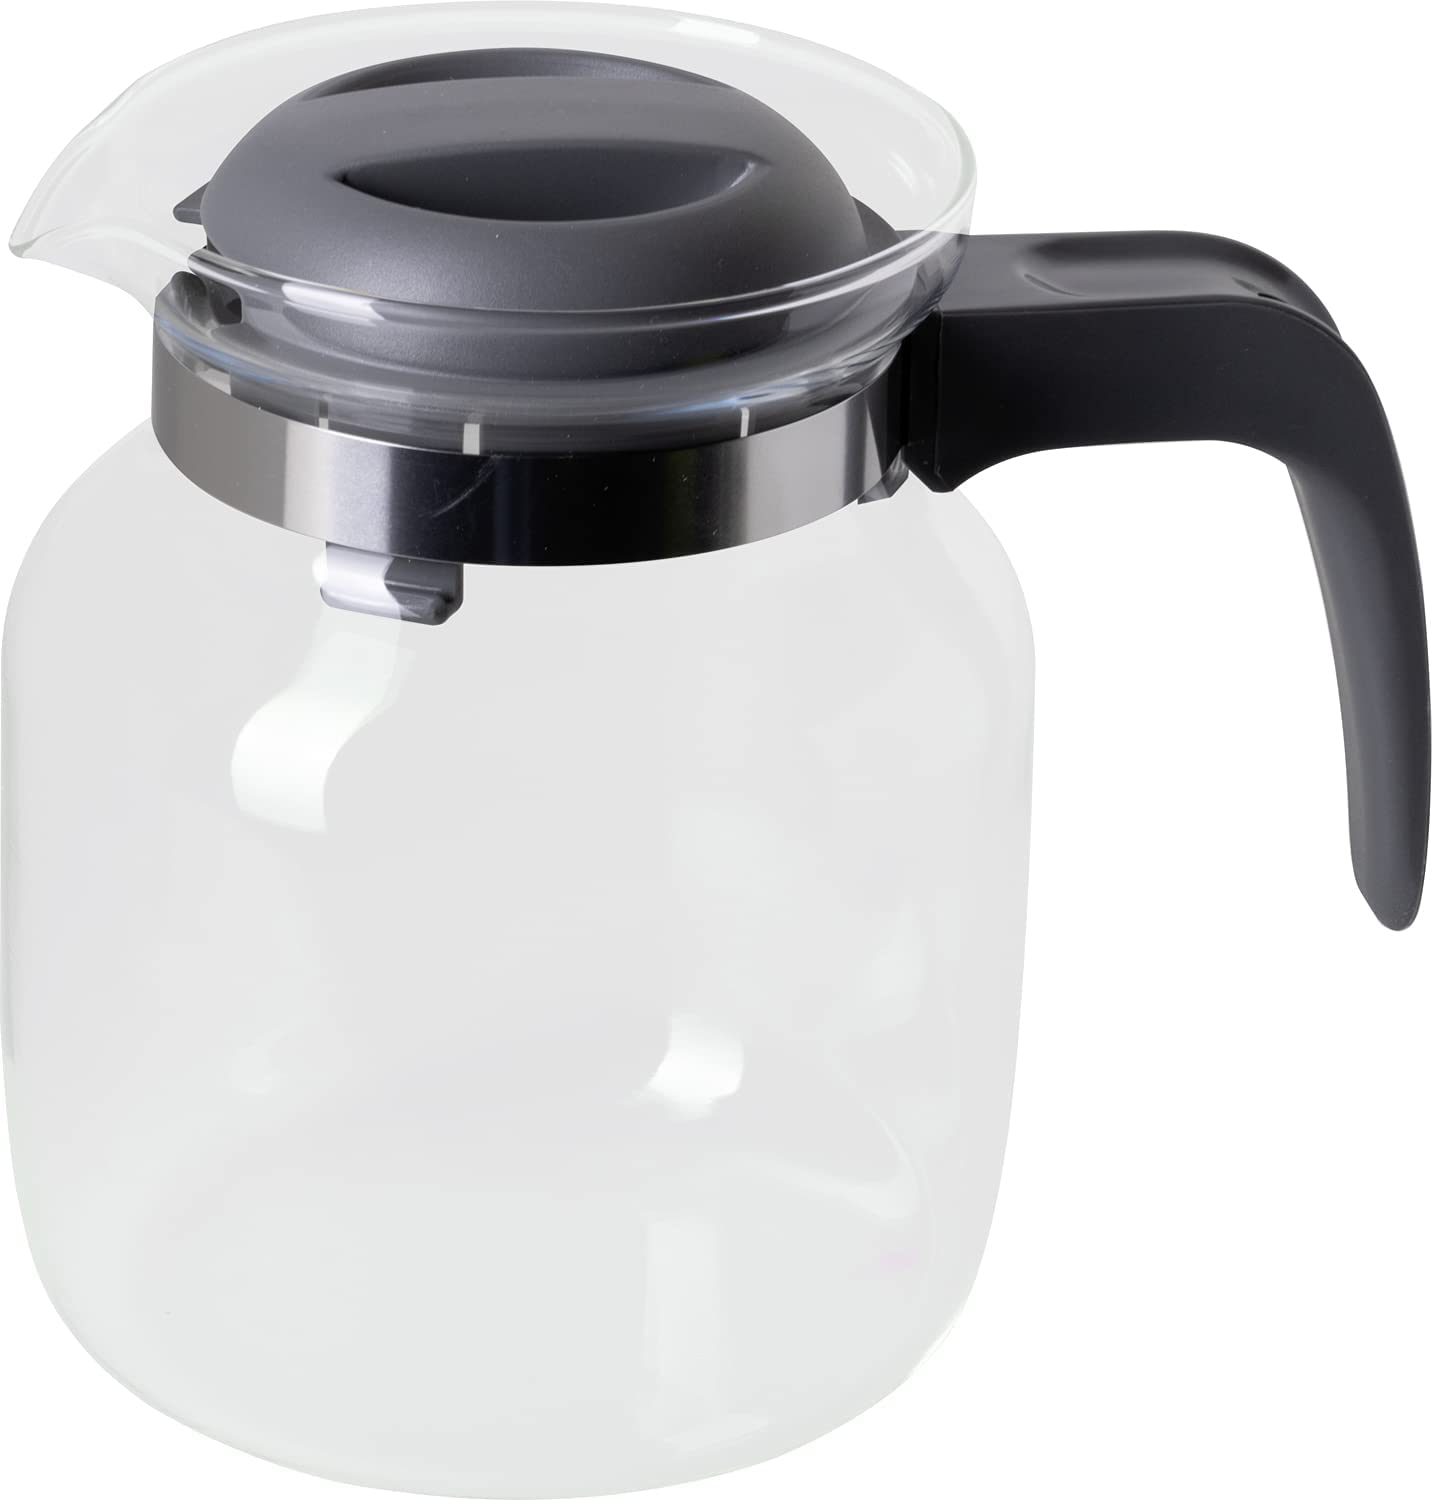 Wenco Premium Glass Coffee Pot/Teapot with Plastic Lid, 1.25 Litre, Clear, Gray (2021 version)